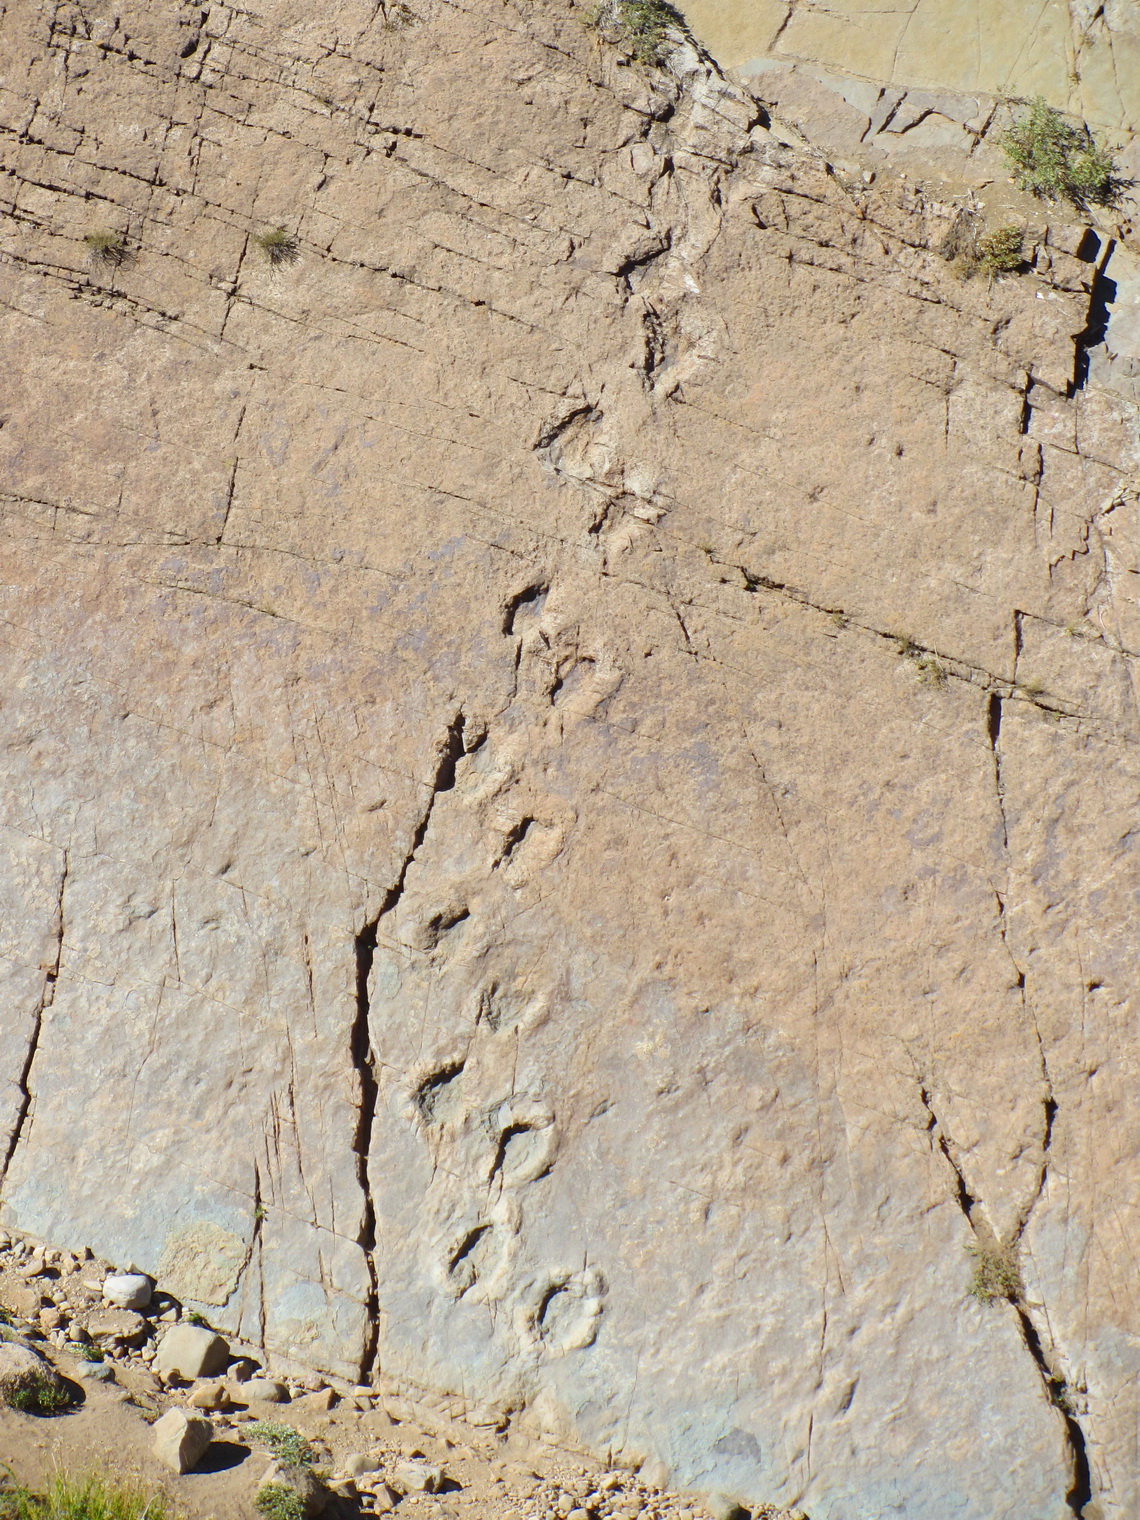 Dinosaur footprints in the wall